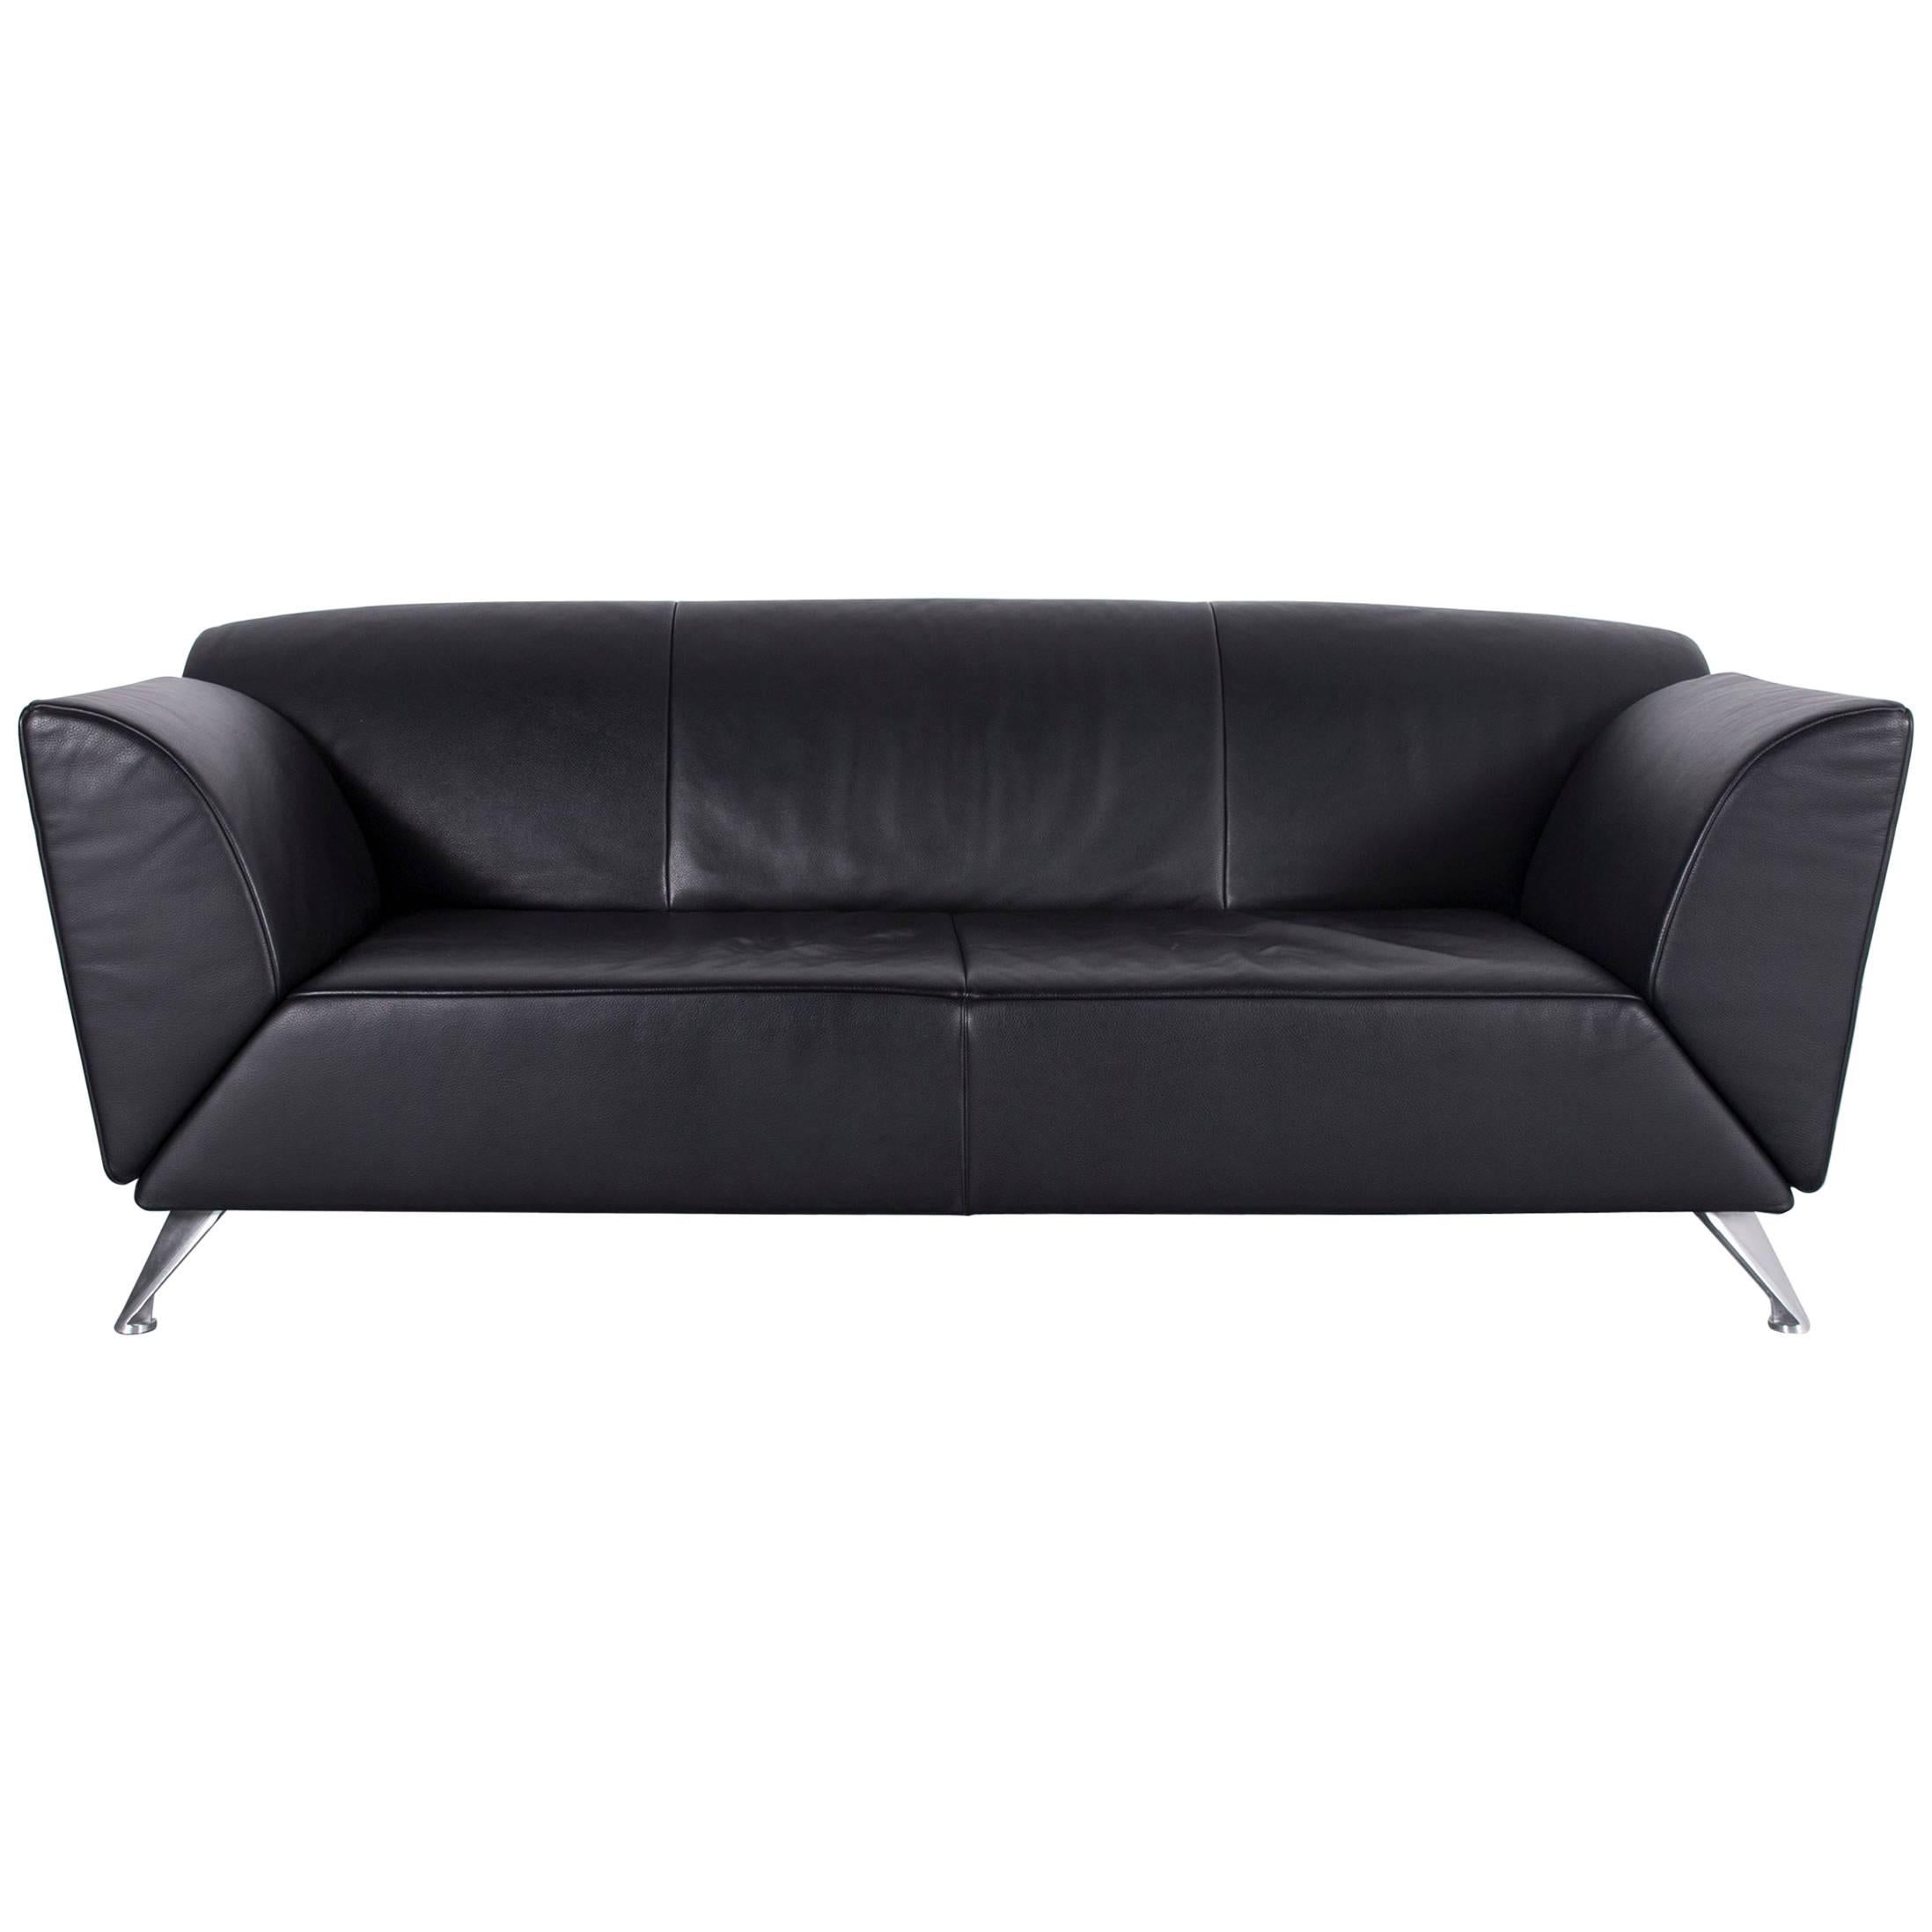 Jori JR 9700 Leather Sofa Black Three-Seat Couch